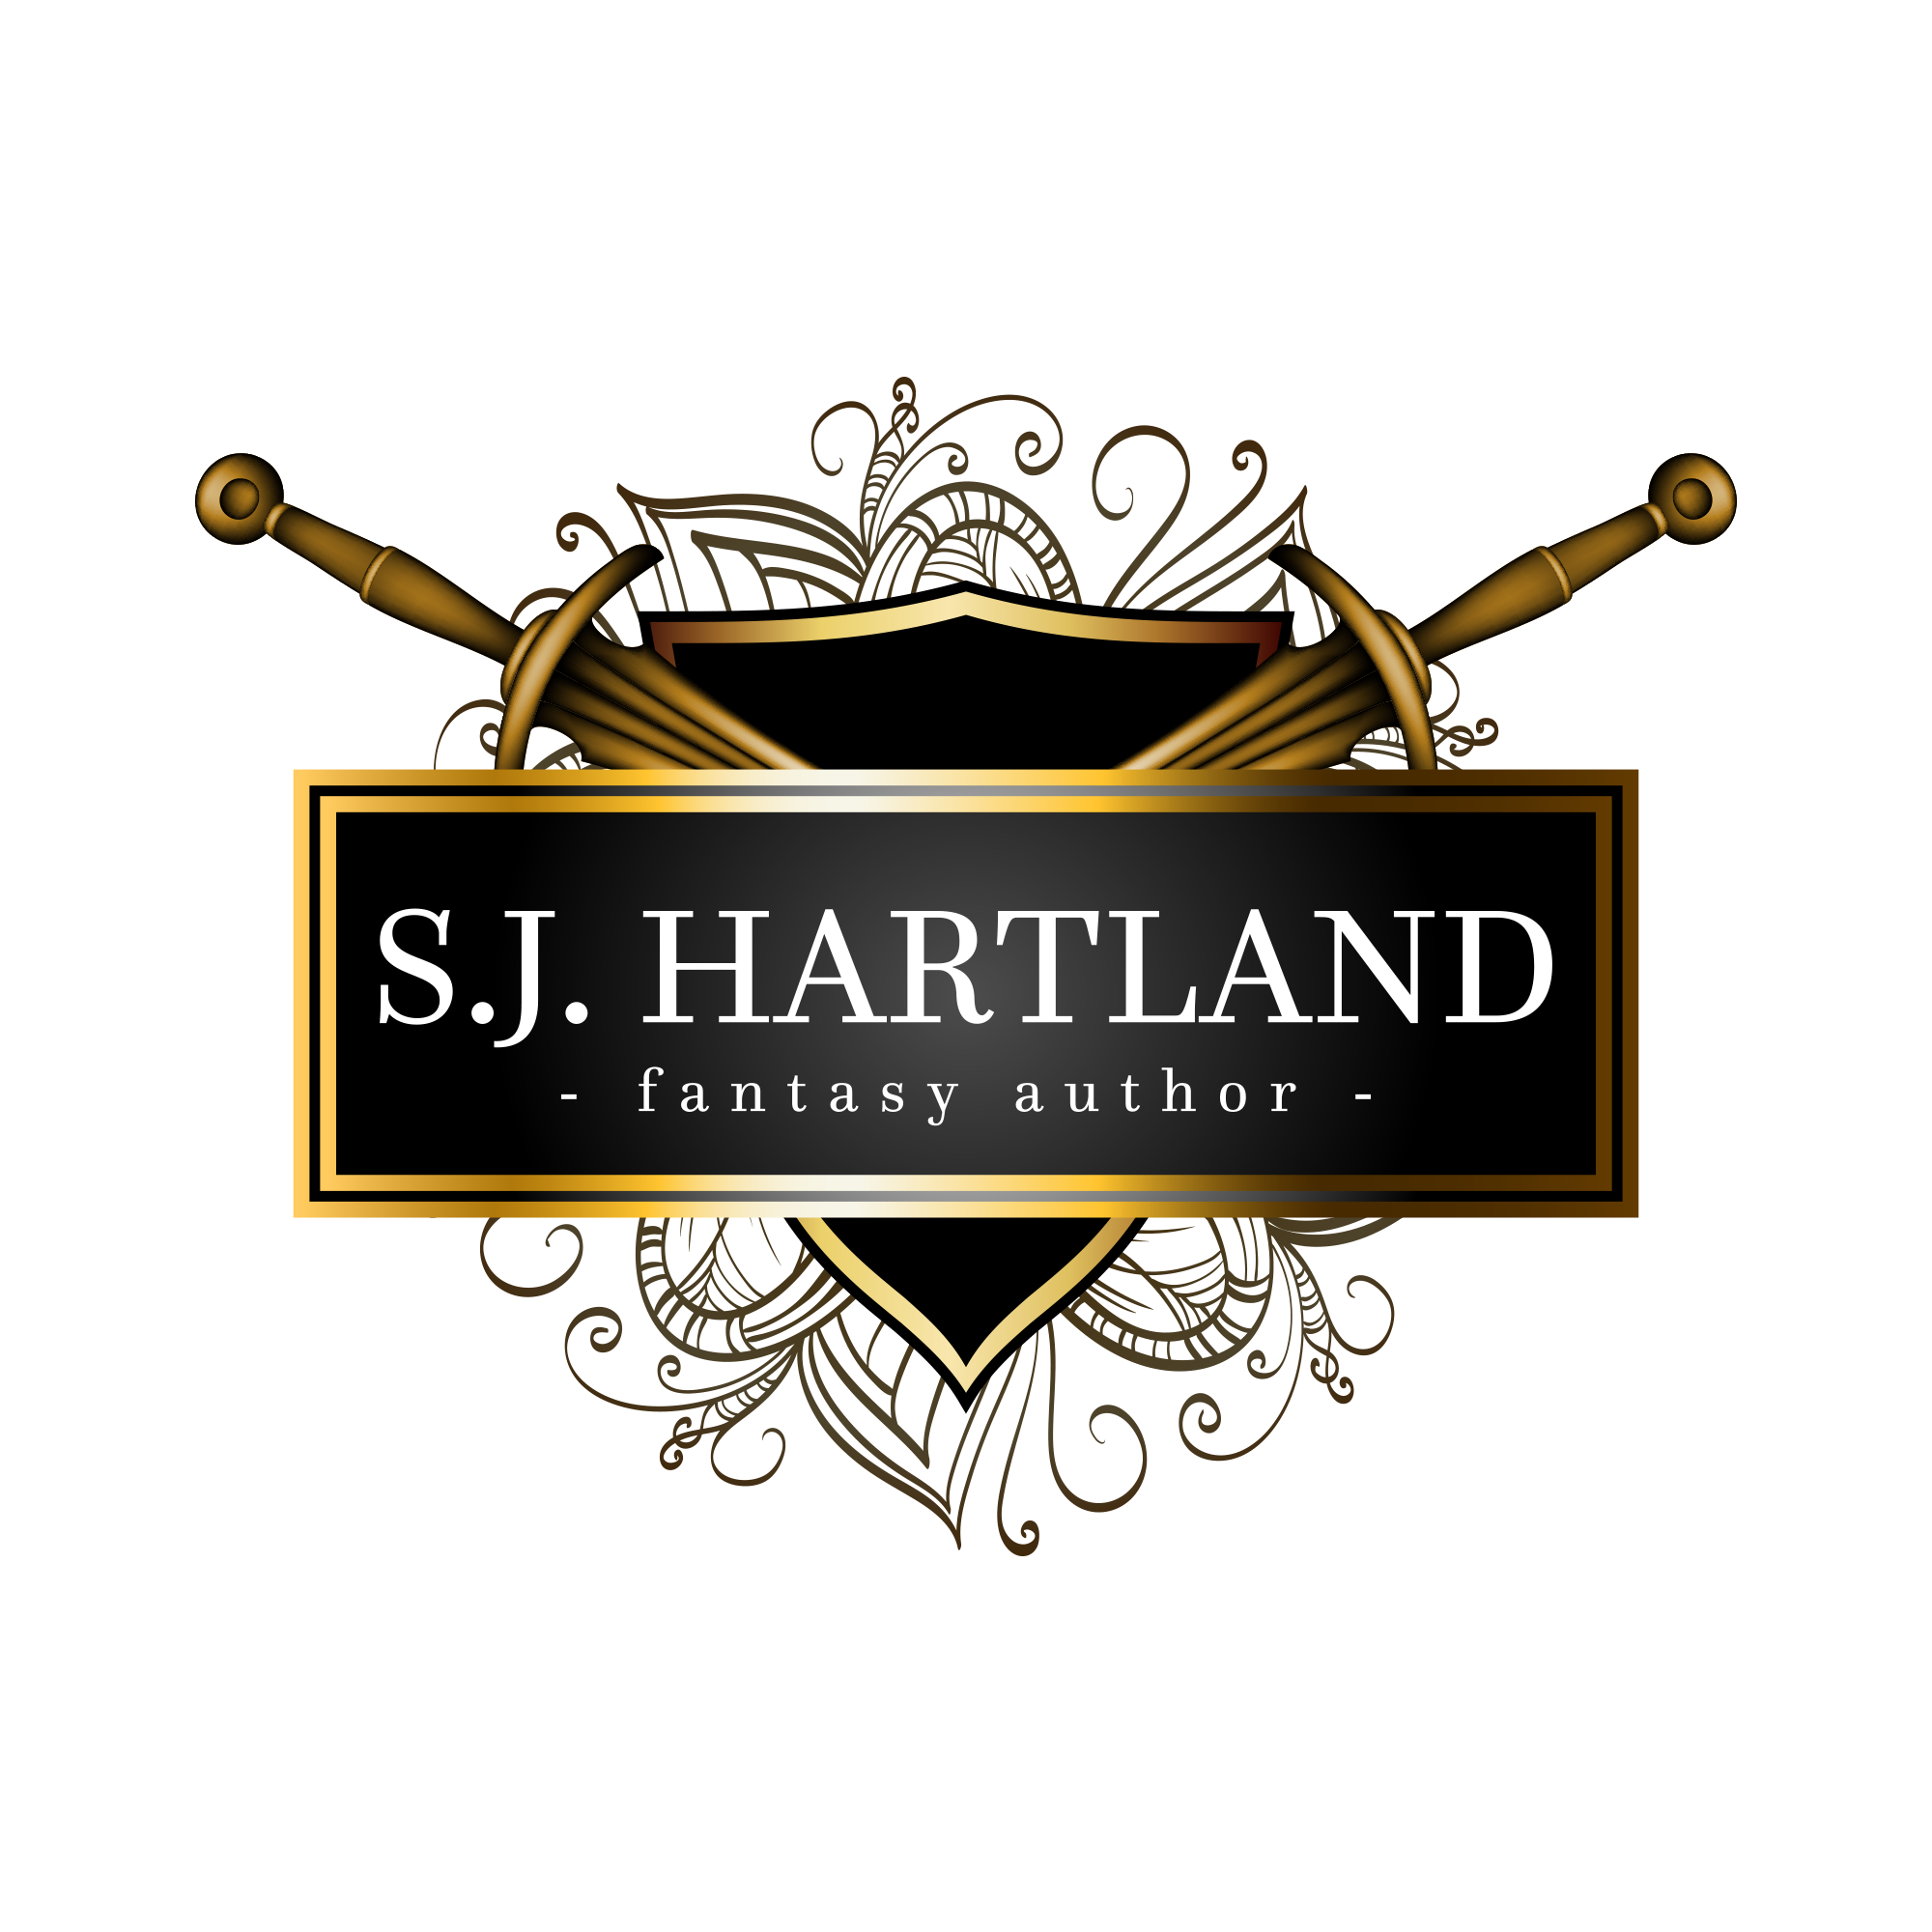 Author S J Hartland